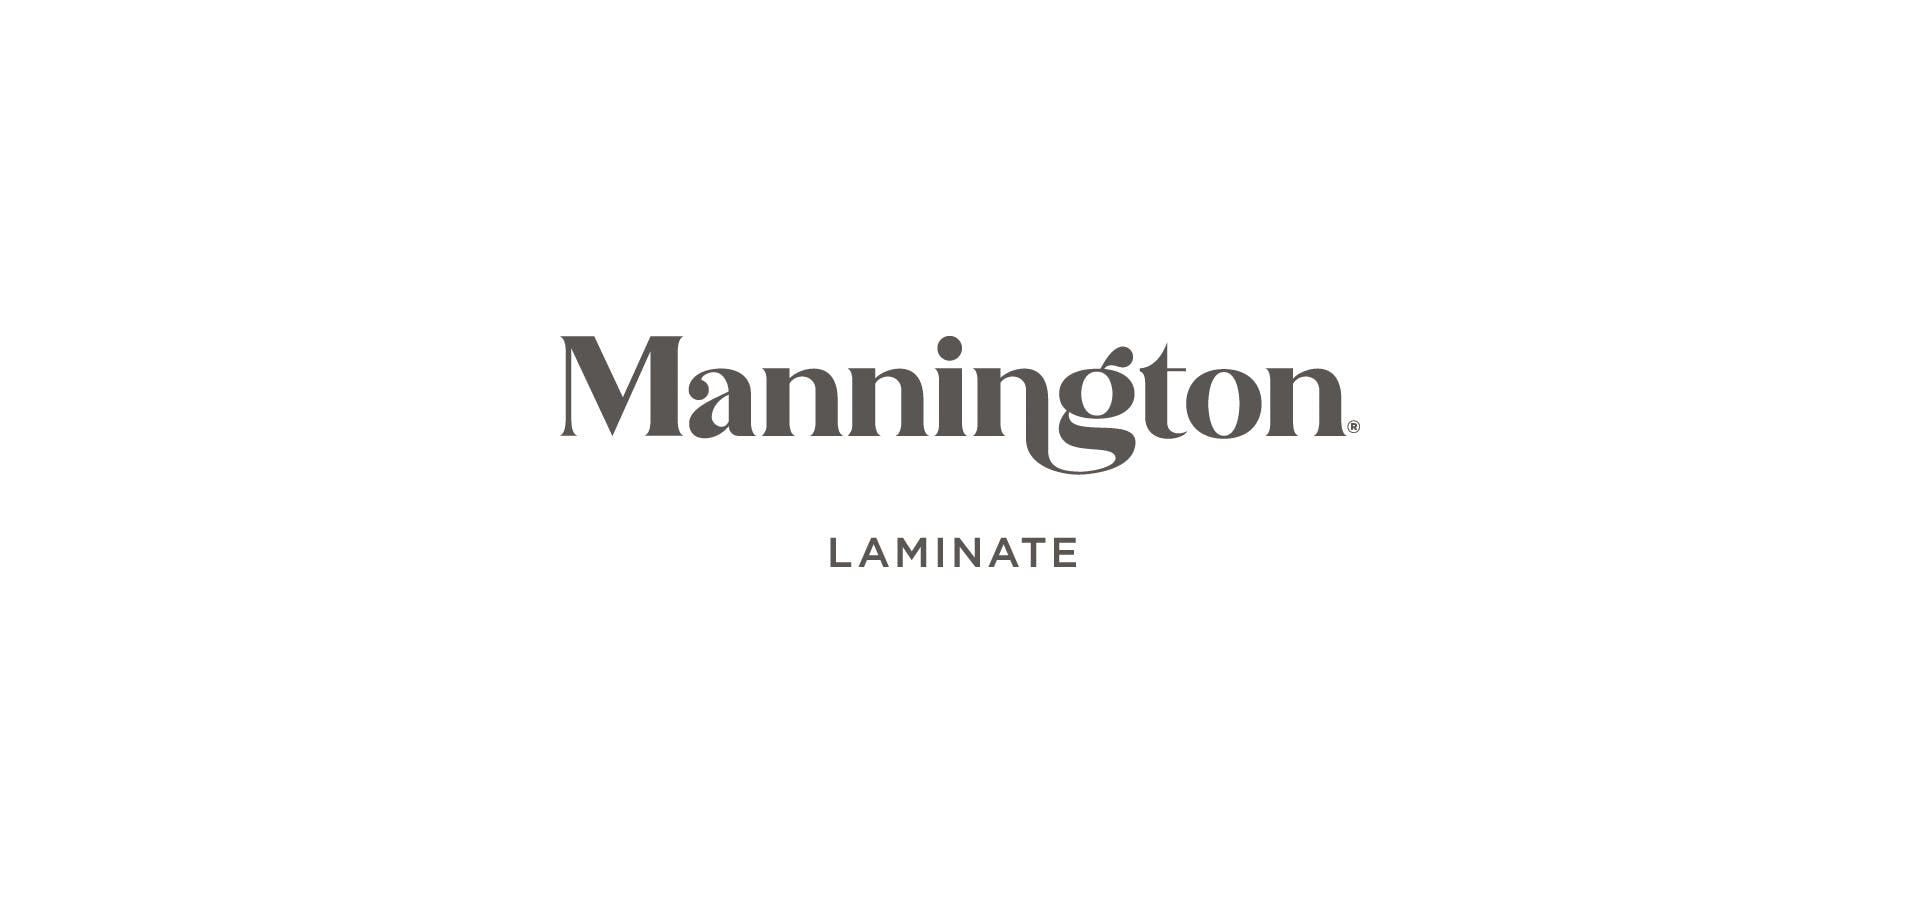 Mannington Laminate Logo